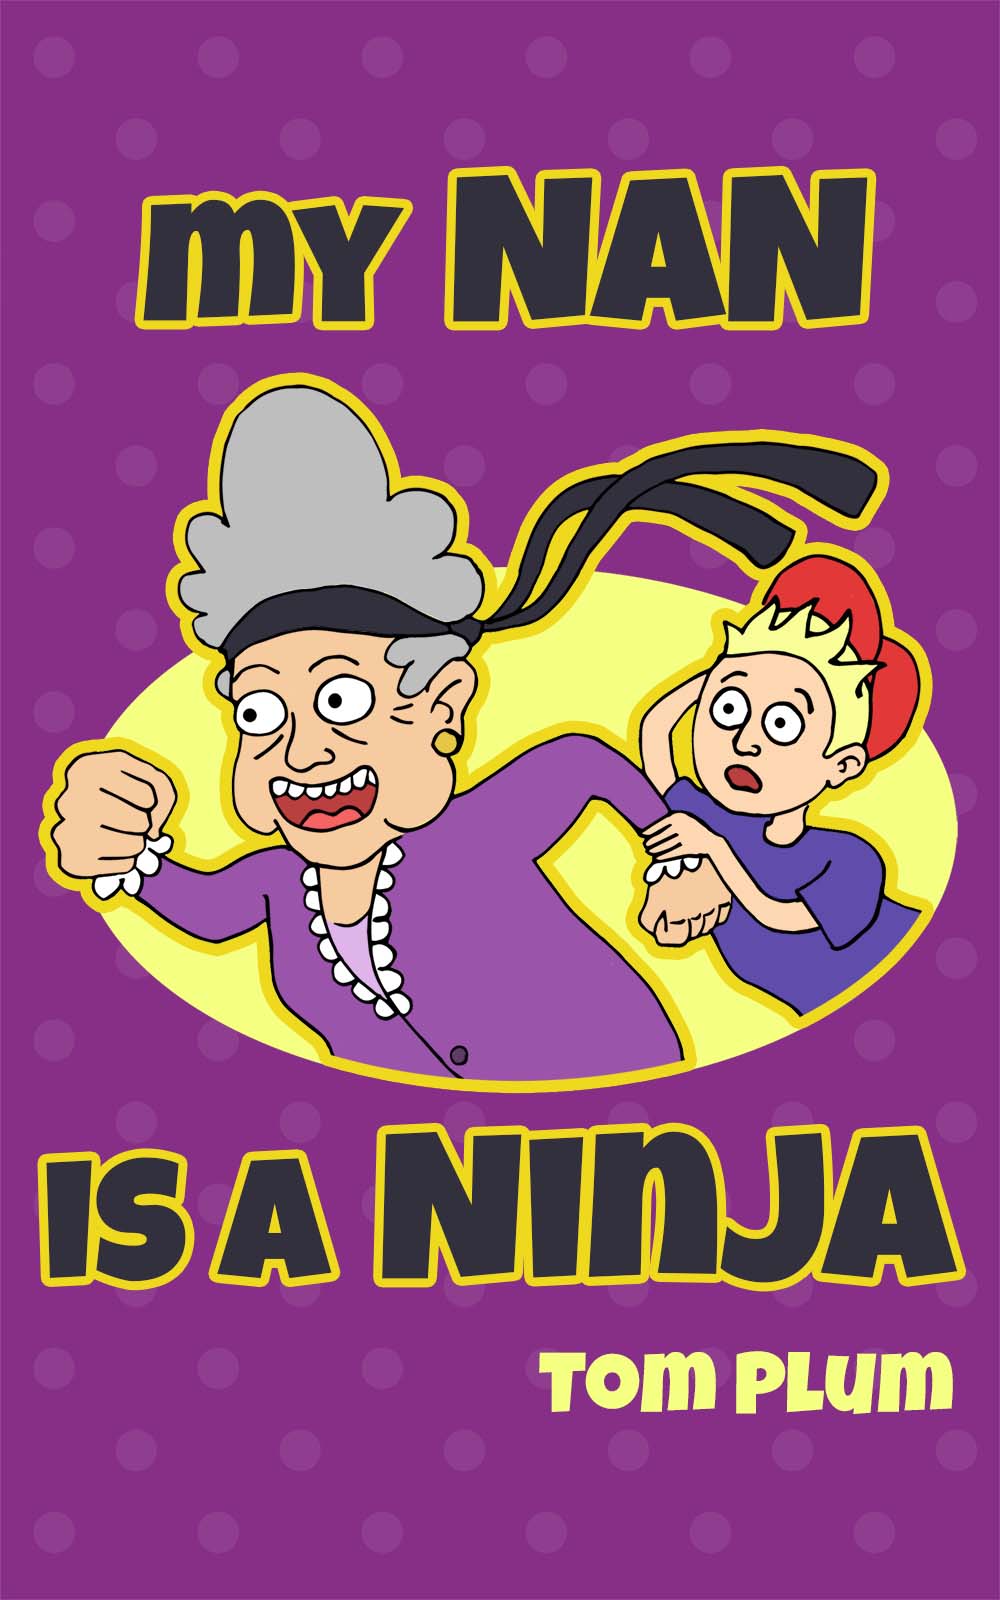 FREE: My Nan is a Ninja by Tom Plum